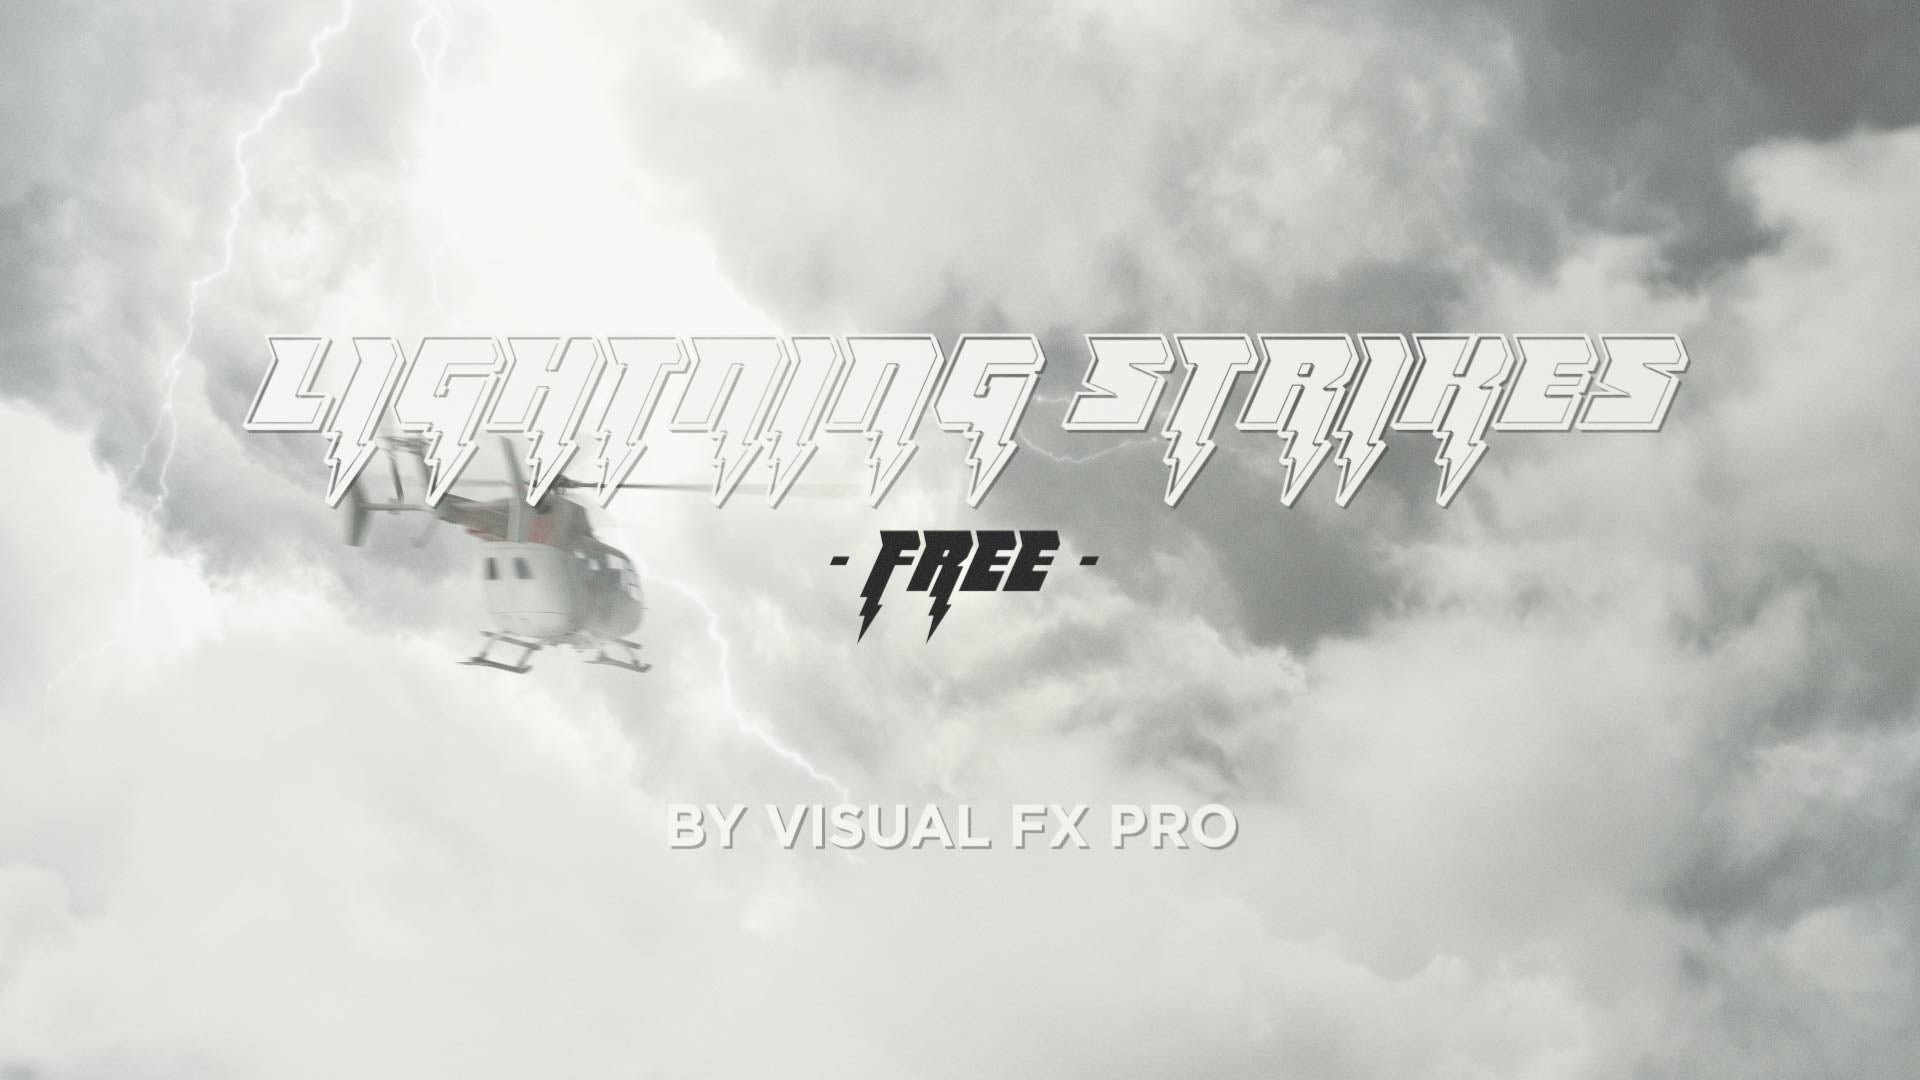 FREE - Lightning Strikes